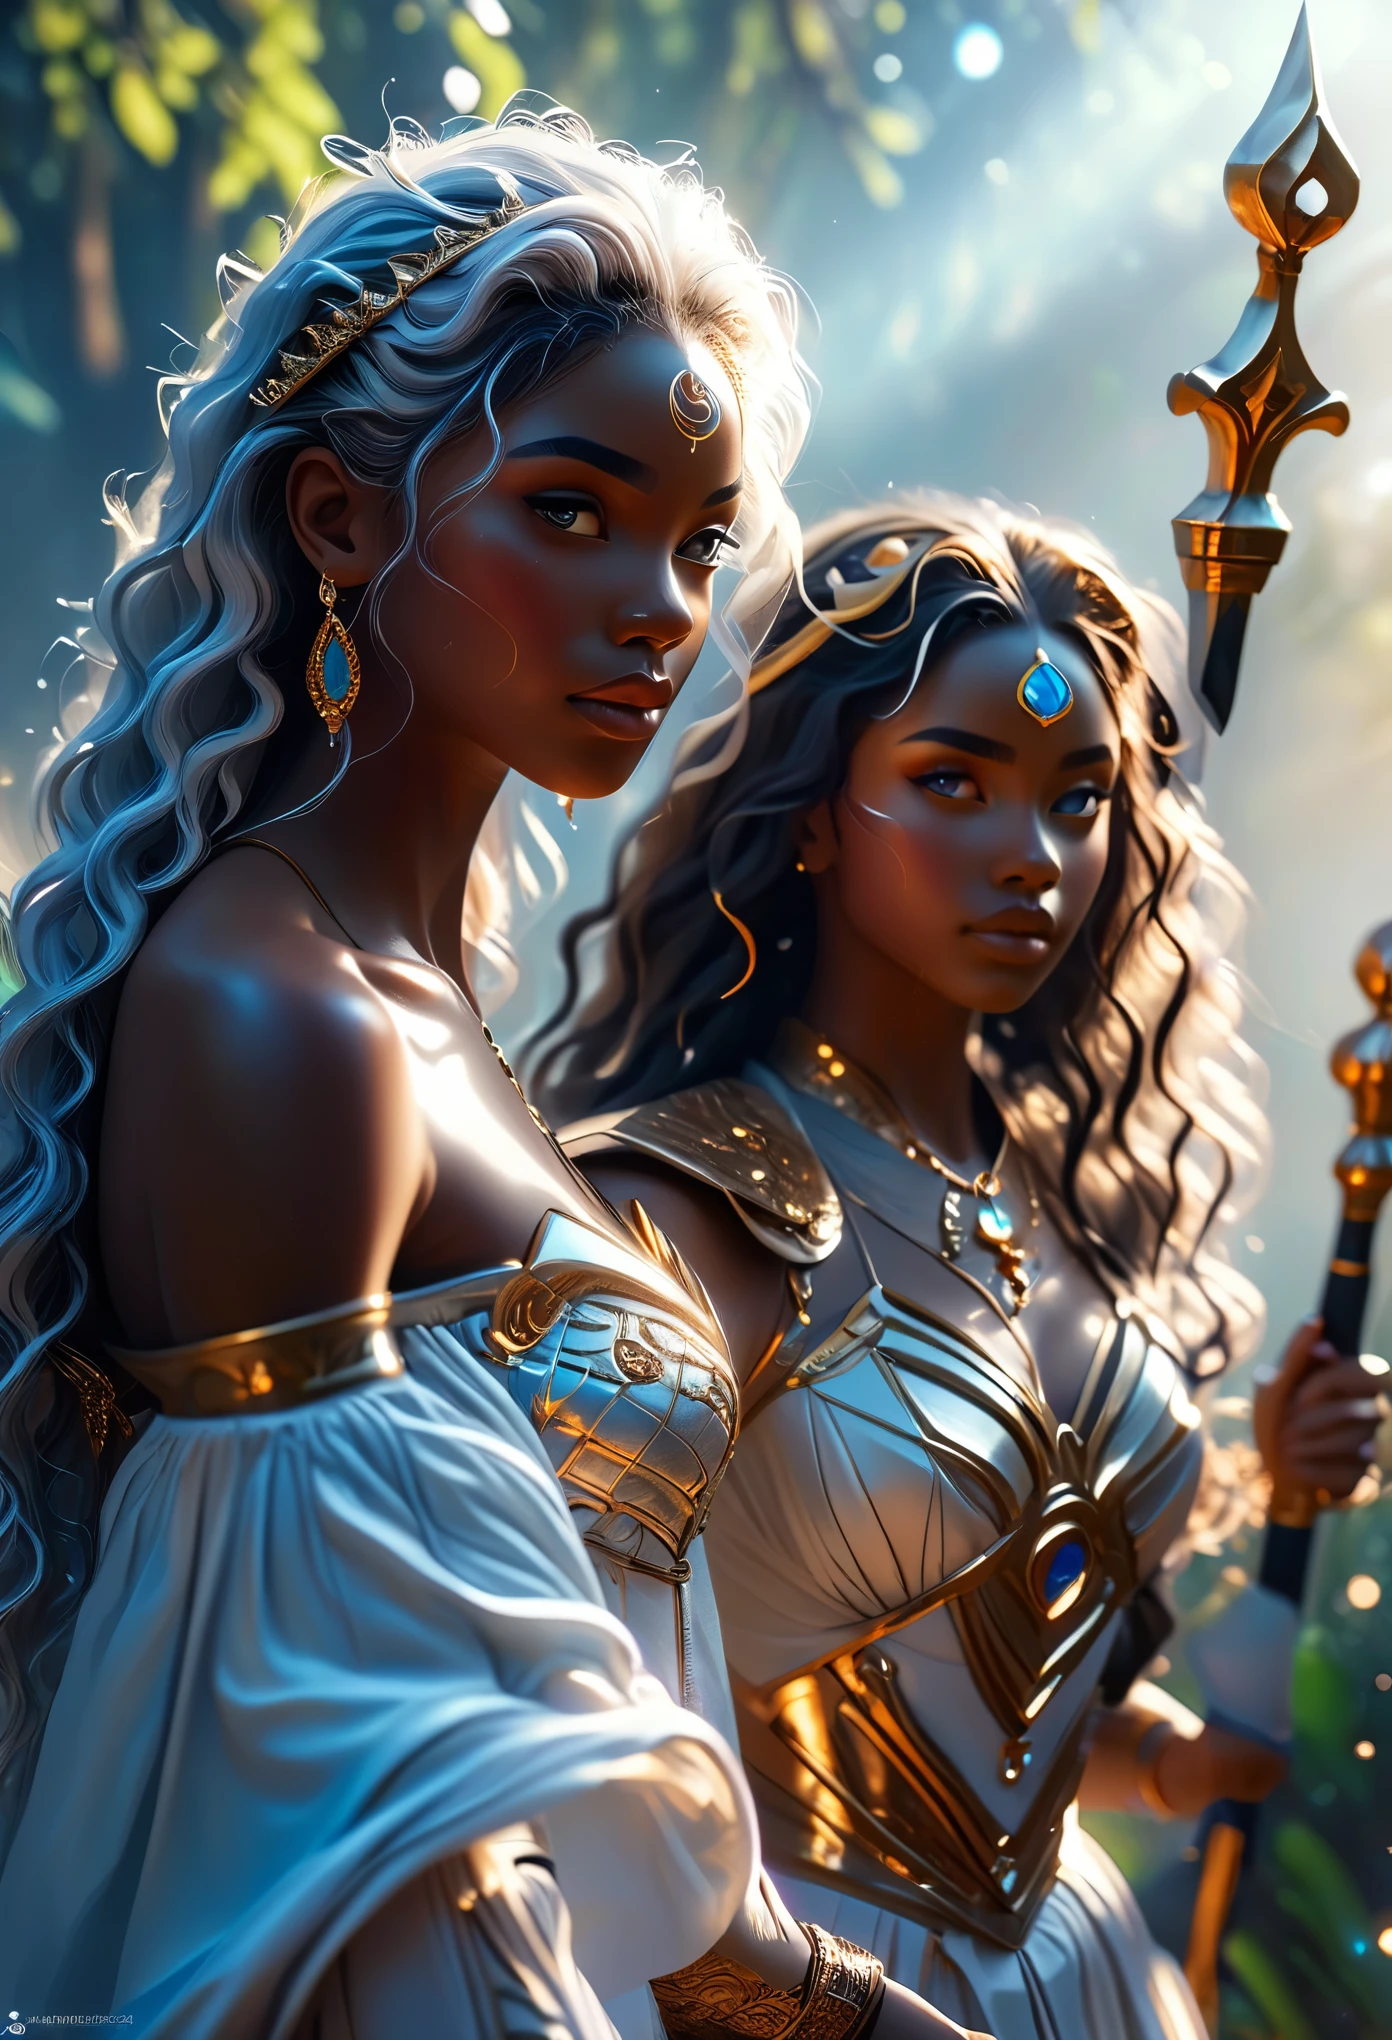 Novel in celestial chaotic lและscape, (((close up of a สวย young darkskin couple in 18's))), (a young very สวย pharaon with dark curly hair:1.3) และ (a young very สวย queen with long whitehair:1.7), fighting with swords และ lances สวย visage, (((สวย))), ใบหน้าที่สมบูรณ์แบบ, ทั้งร่างกาย, รายละเอียด face และ body, ฉากโรแมนติก, วิถีโรแมนติก, คู่รักเซ็กซี่, 8ก, Extremely รายละเอียด, (คุณภาพสูง, เหมือนจริง, photoเหมือนจริง: 1.37), ทั้งร่างกาย, ideal proportions และ defined complexion, คุณสมบัติที่ออกแบบมาอย่างพิถีพิถัน, inaccessible สวยty, ลาความสมบูรณ์แบบ, chef ศิลปะistique&#39;ผลงานของ&#39;ศิลปะs, ความสมจริงที่สดใส, sculptures hyper รายละเอียดes, formes เหมือนจริงs, น่าทึ่งจริงๆ, ความรู้ความสามารถที่ไร้ที่ติ, เงางามบริสุทธิ์, ethereal สวยty, รูปทรงที่ละเอียดอ่อน, โพสท่าที่โดดเด่น, sublime สวยty, ความแตกต่างที่ละเอียดอ่อน, องค์ประกอบแบบไดนามิก, สีสว่าง, แสงสว่างที่สมบูรณ์แบบ, การแสดงออกในการเคลื่อนไหว, ออร่าสวรรค์, การแสดงตนอันสง่างาม, บรรยากาศเหมือนฝัน, การแสดงผลของ&#39;octane รายละเอียด inégalé, tendance sur ศิลปะstation, Photographie ศิลปะistique 8k, photoเหมือนจริง concept ศิลปะ, เป็นธรรมชาติ, อ่อนนุ่ม, แสงที่สมบูรณ์แบบระดับโรงภาพยนตร์, ไคอารอสคูโร, ภาพถ่ายที่ได้รับรางวัล, เป็นหัวหน้าของ&#39;ผลงานของ&#39;ศิลปะ, สวย, รายละเอียด, ซับซ้อน, เหลือเชื่อ
